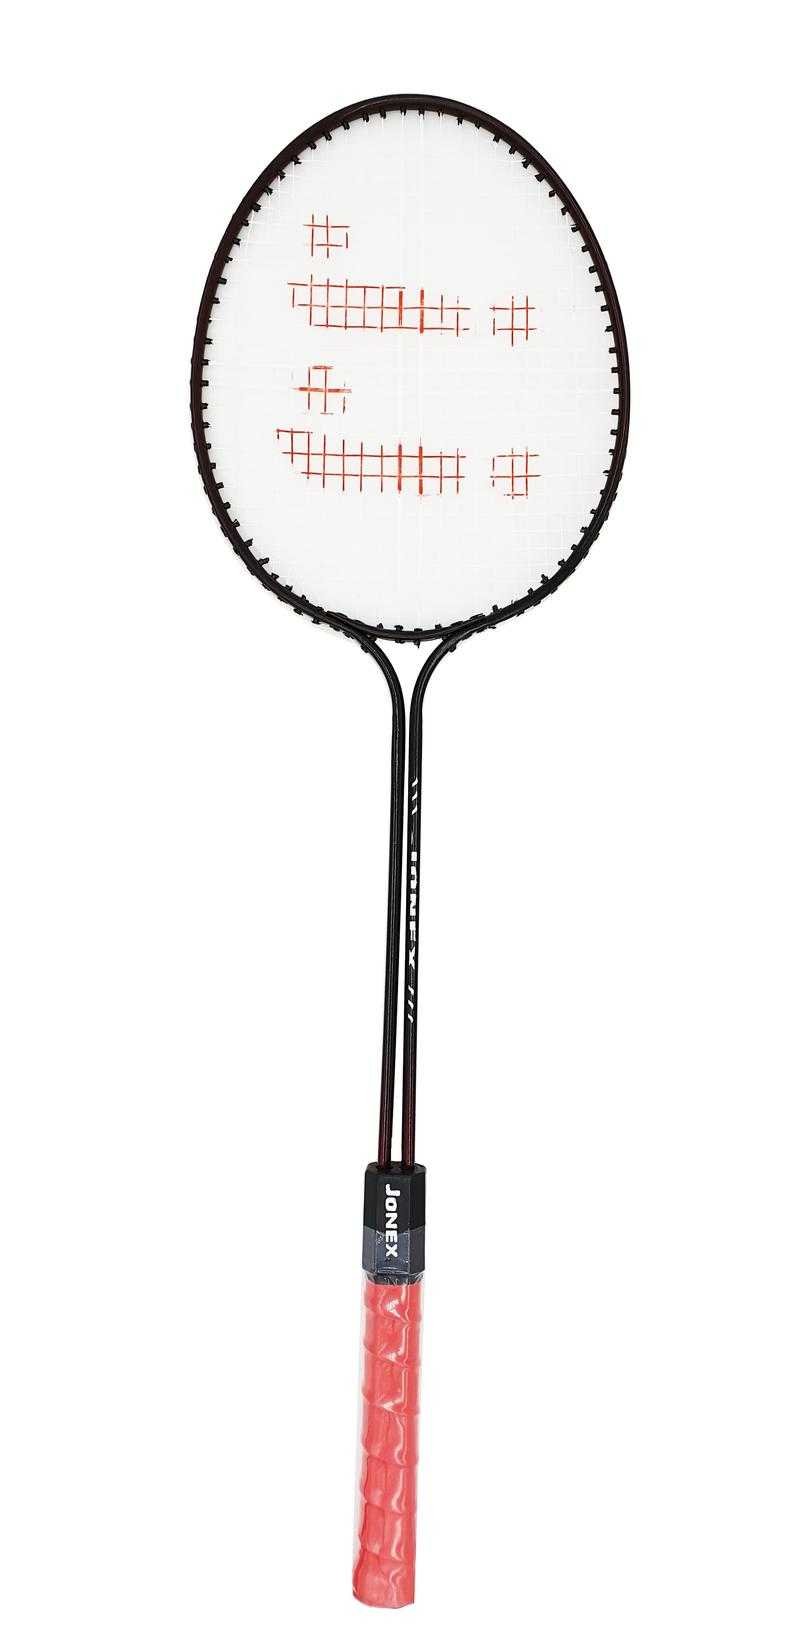 JJ Jonex Iron Badminton Kit (Black) Udaan